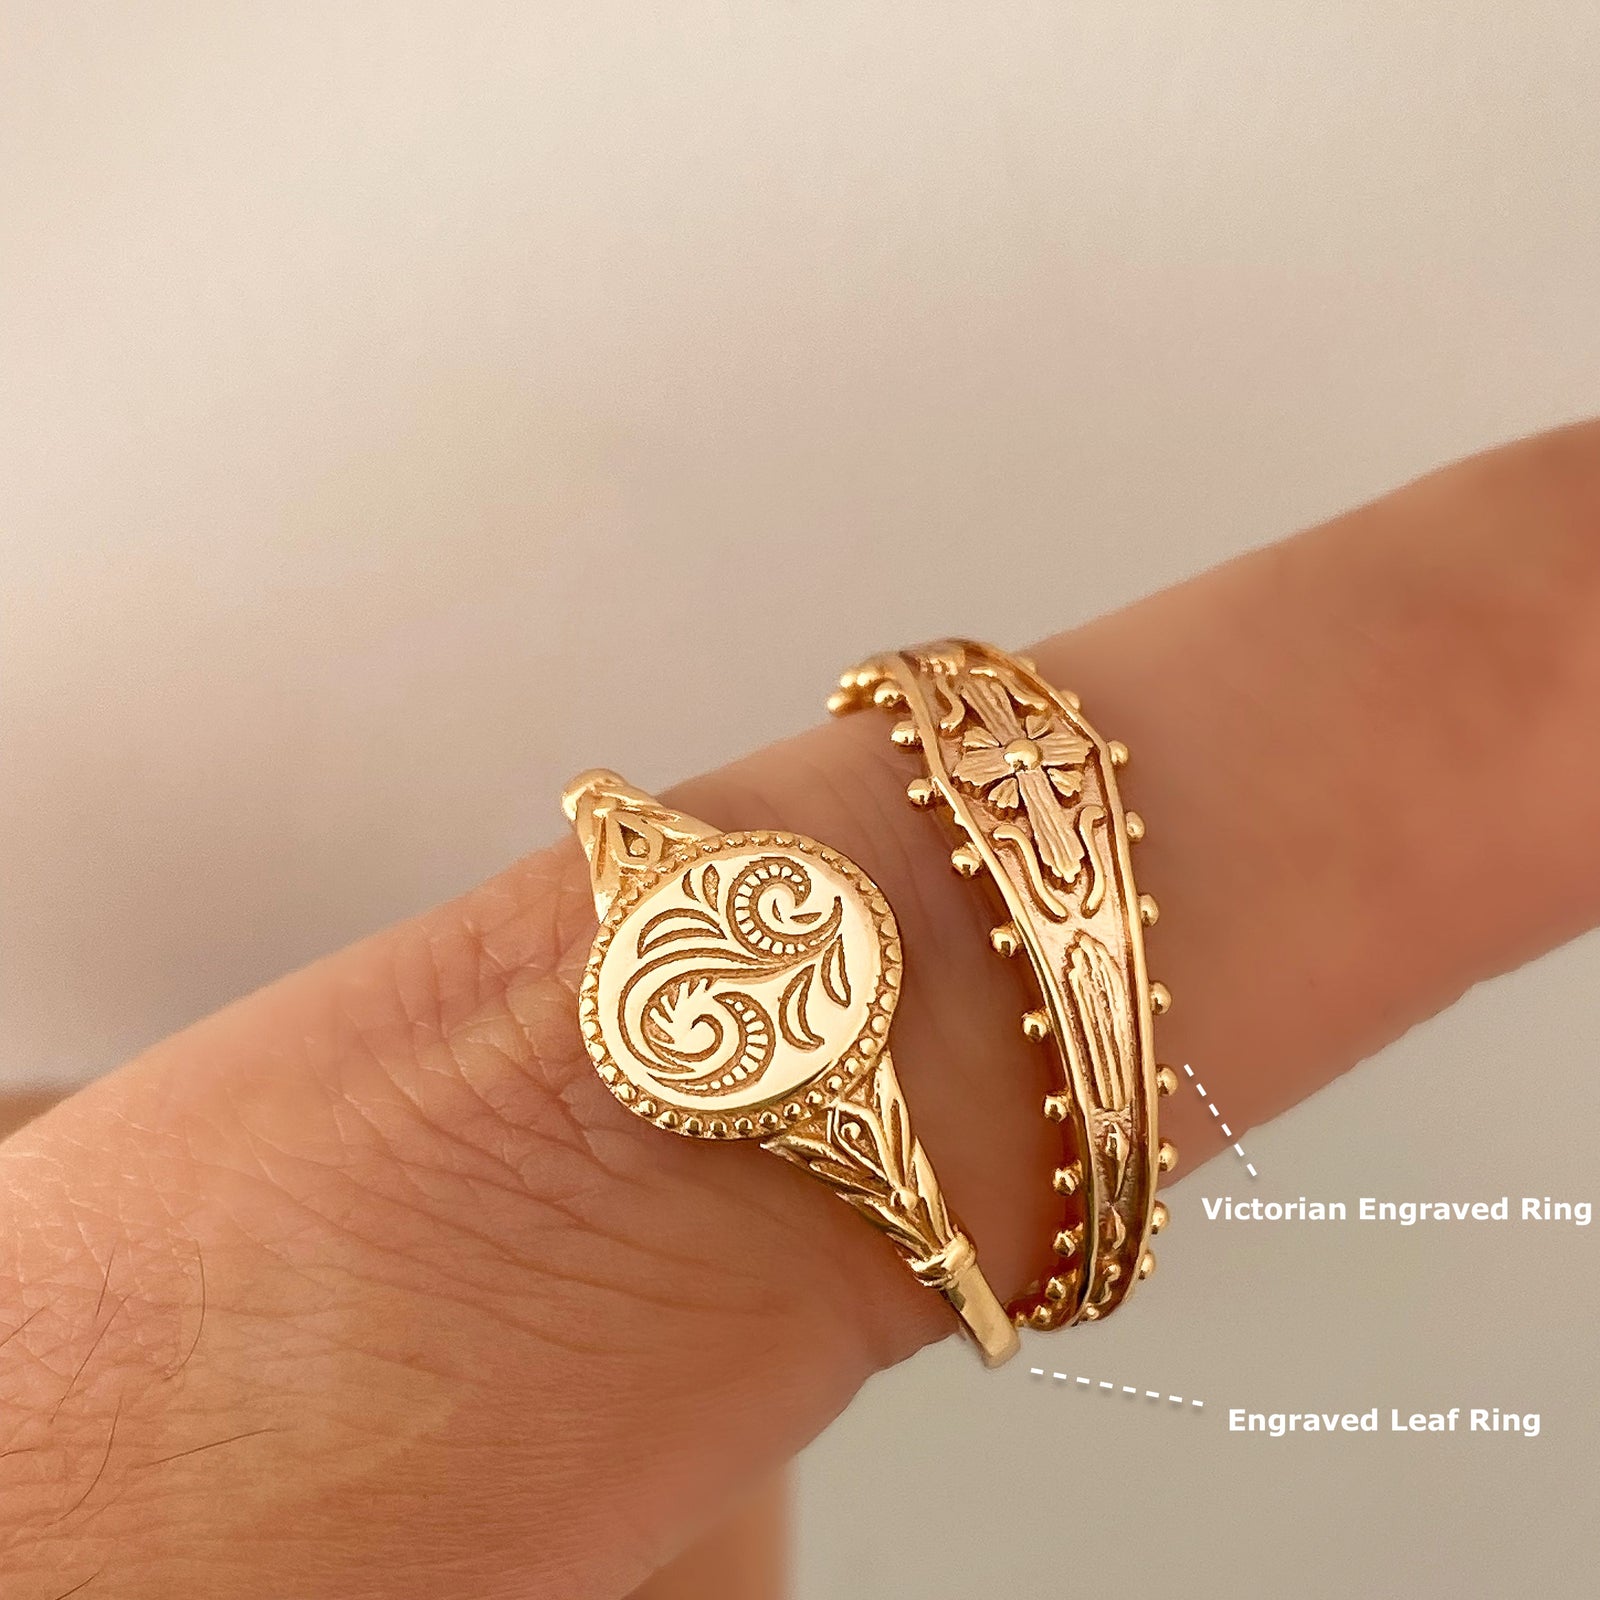 Meideya Jewelry Dainty Engraved Rings for women in gold vermeil